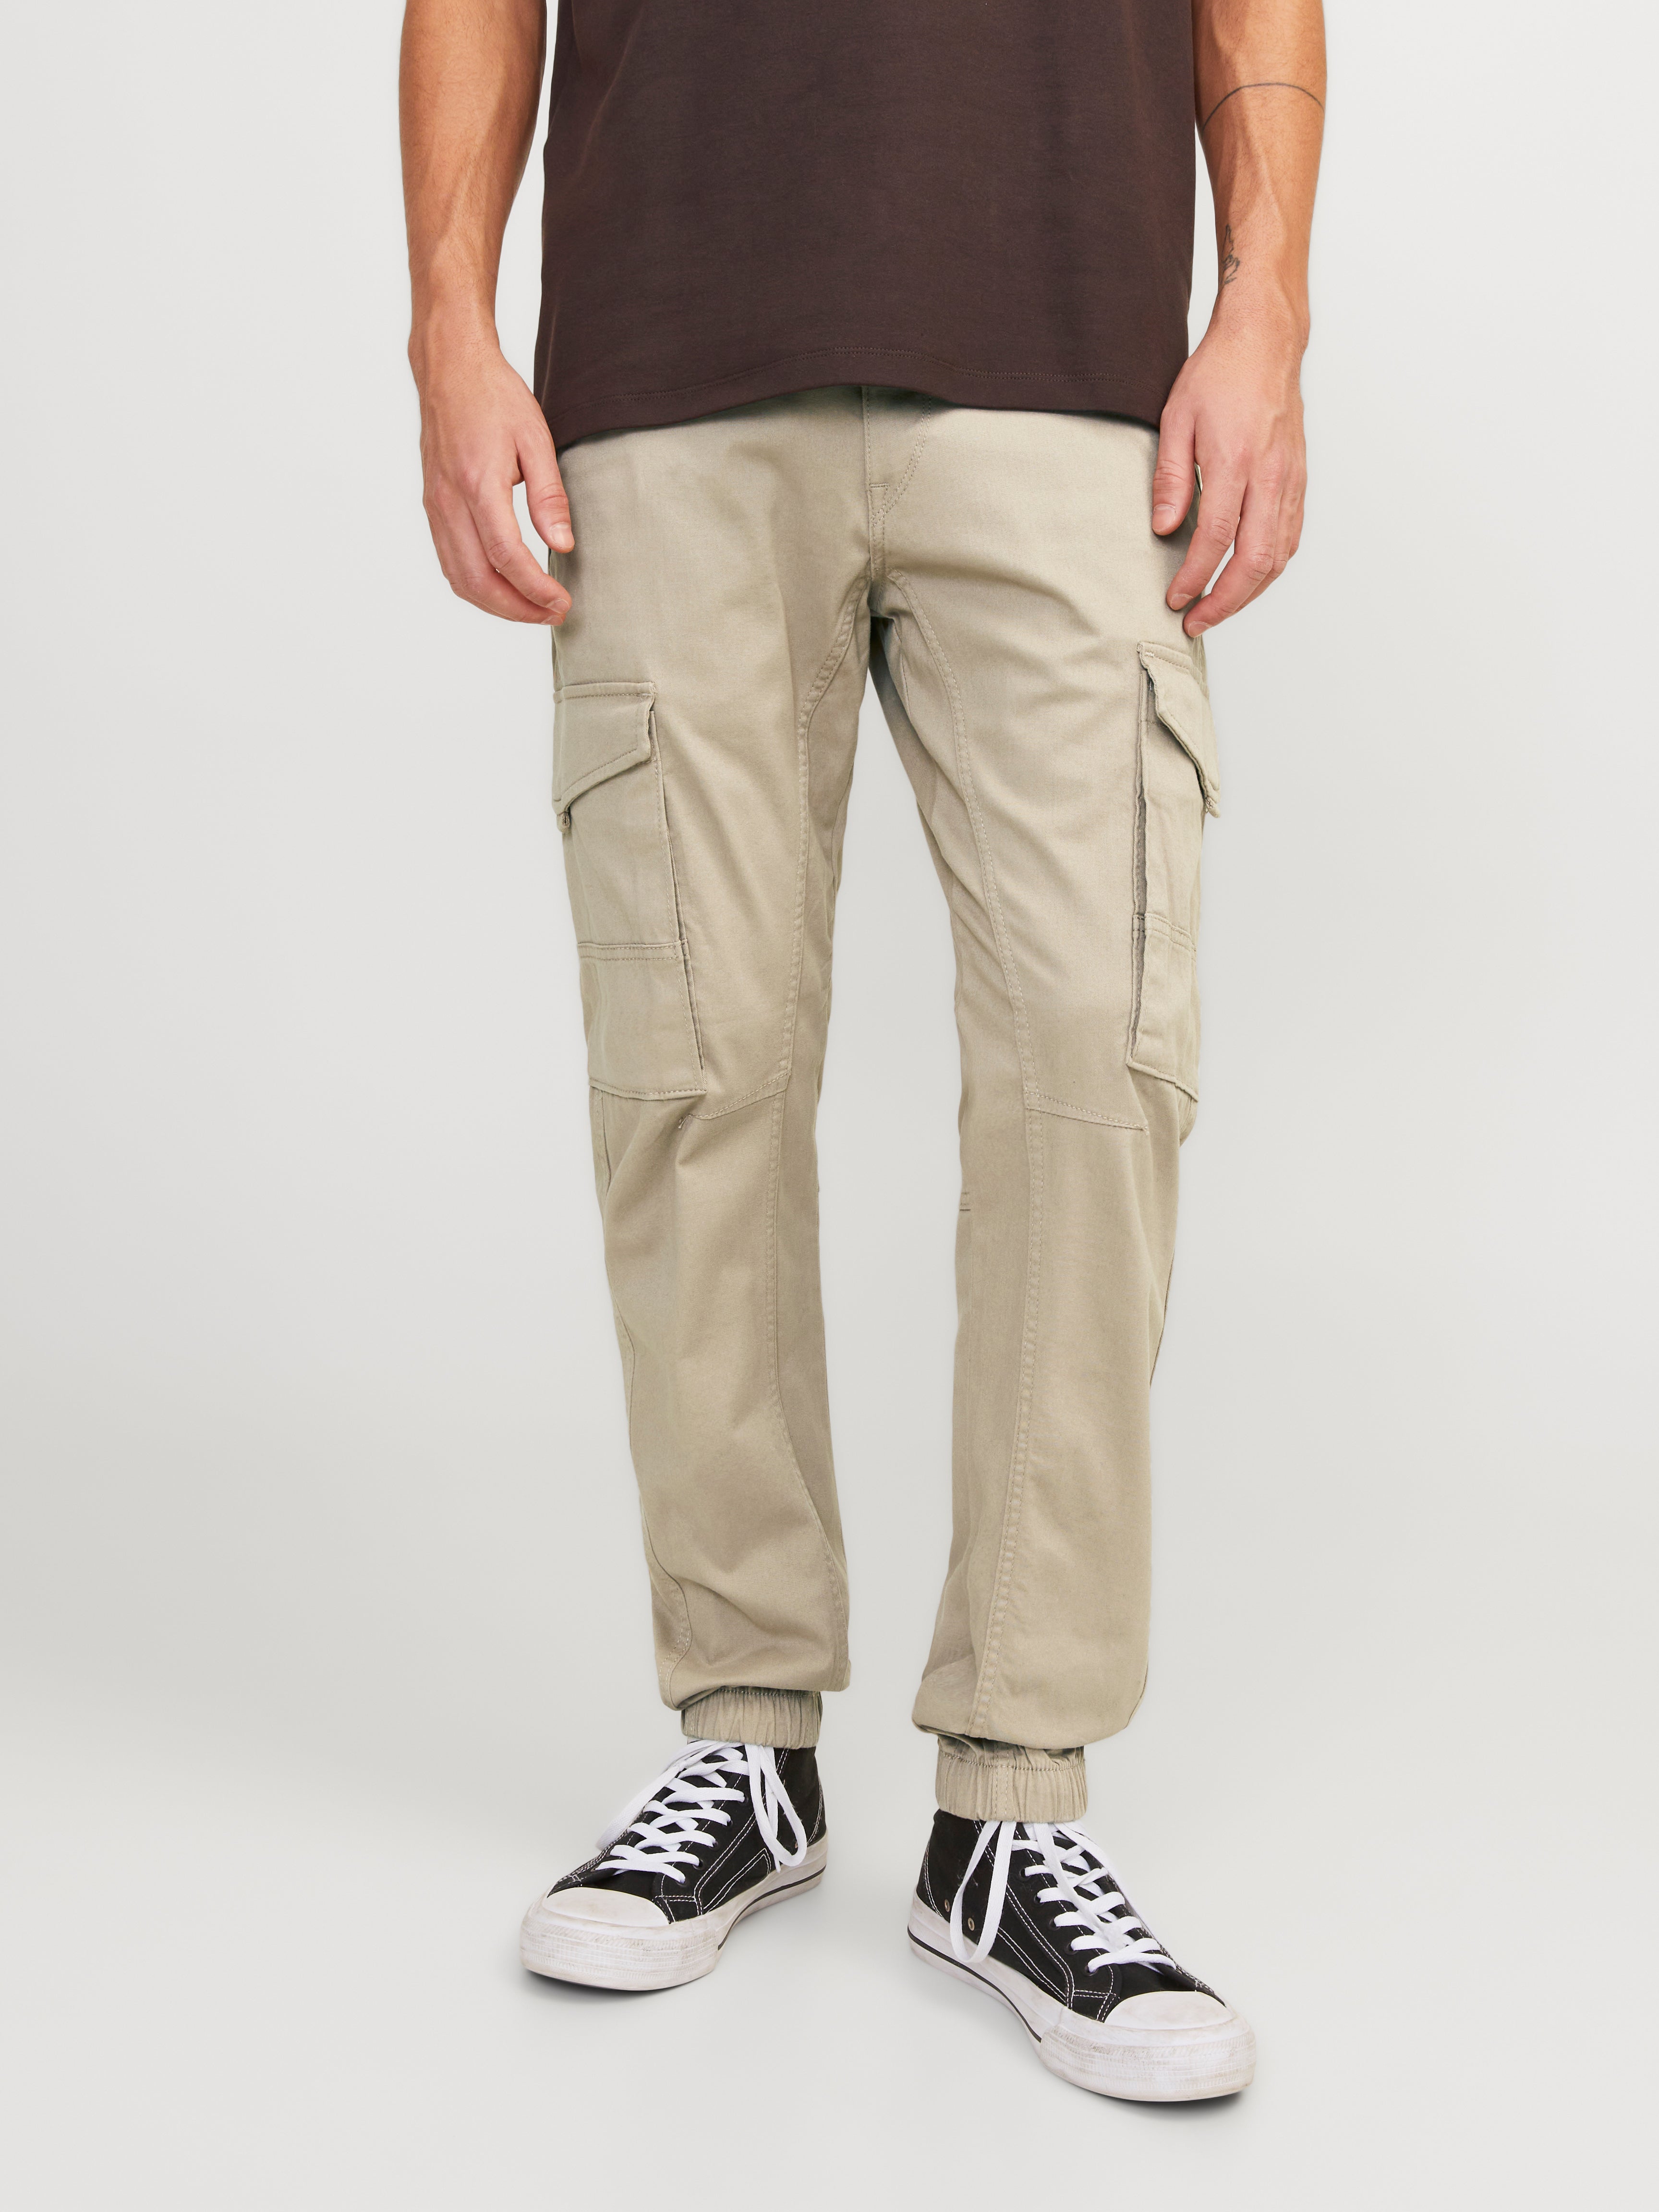 MEN FASHION Trousers Corduroy Jack & Jones slacks Green discount 57% 